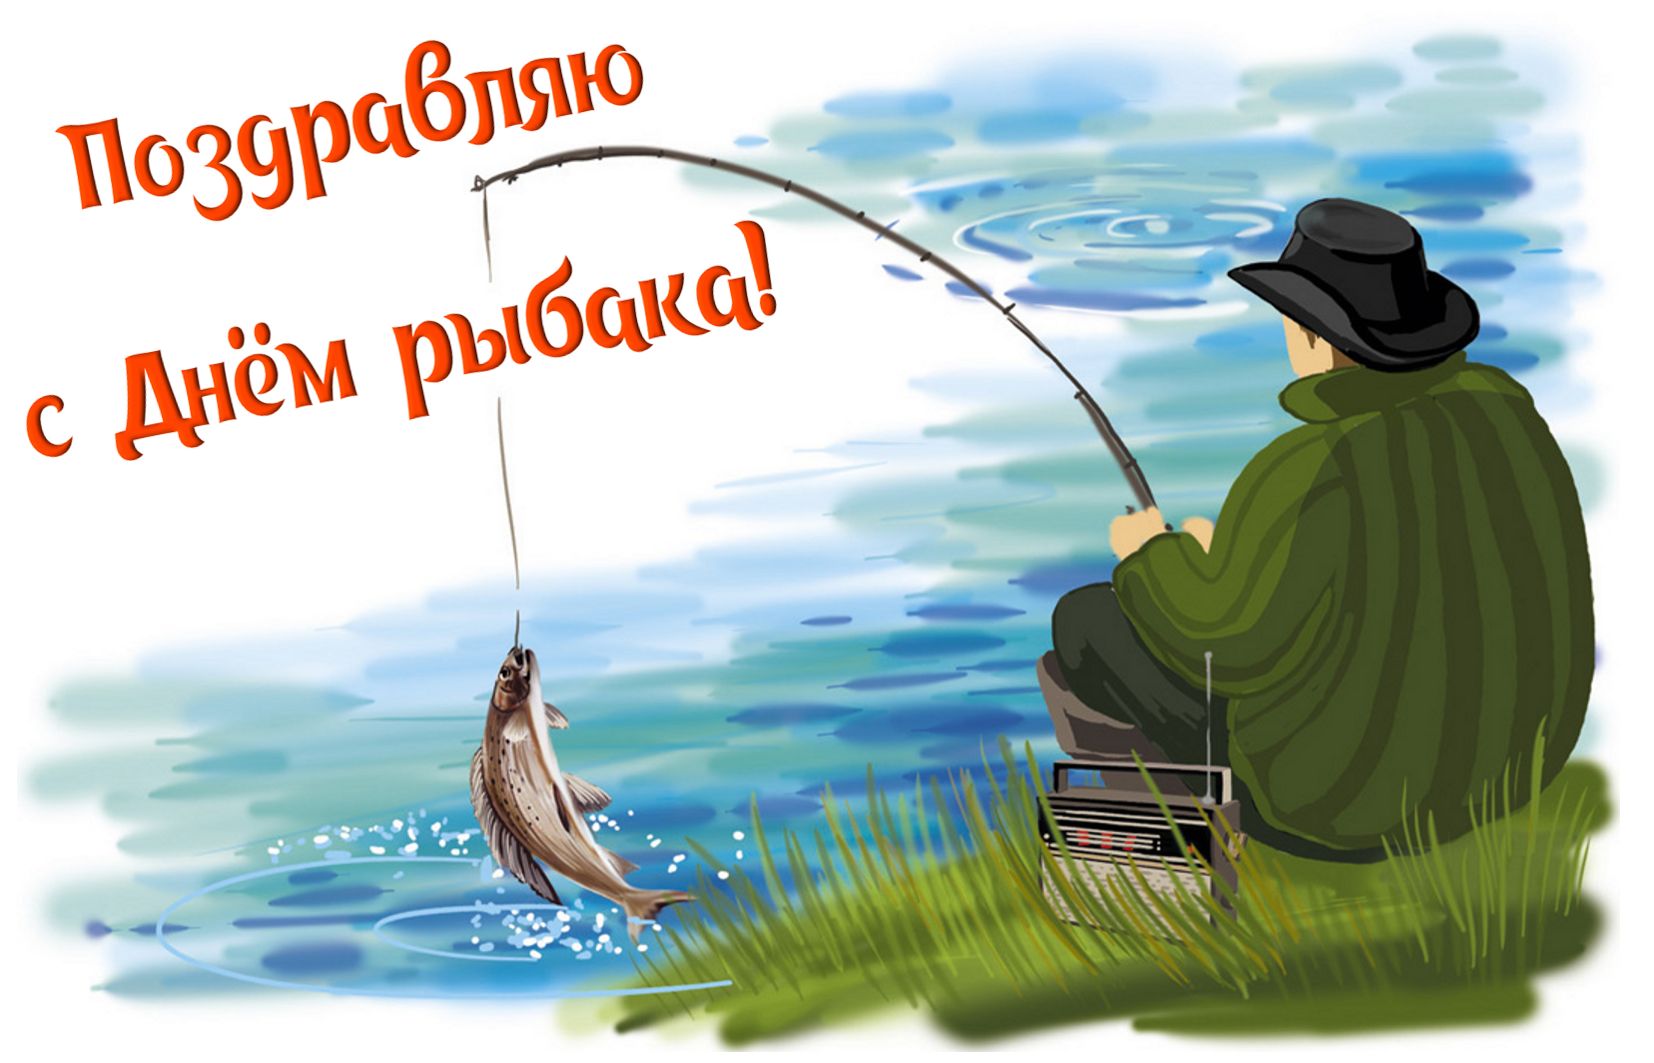 Картинка с рыбаком на берегу на День рыбака